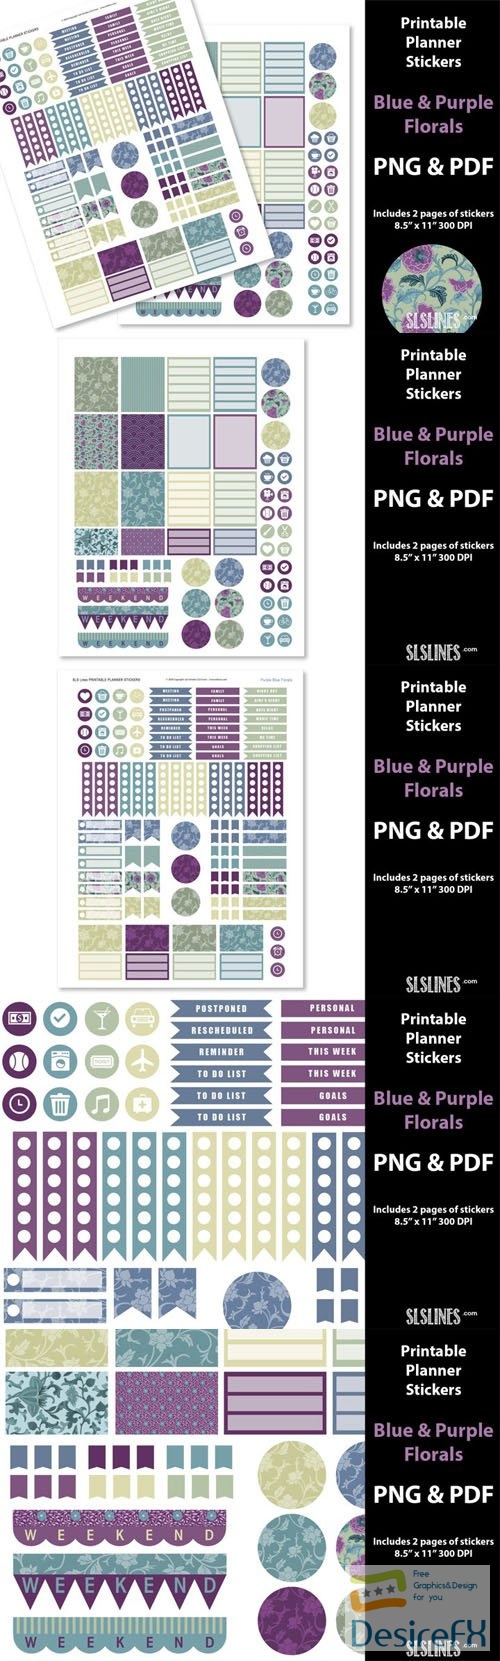 Printable Planner Stickers - Blue & Purple Florals